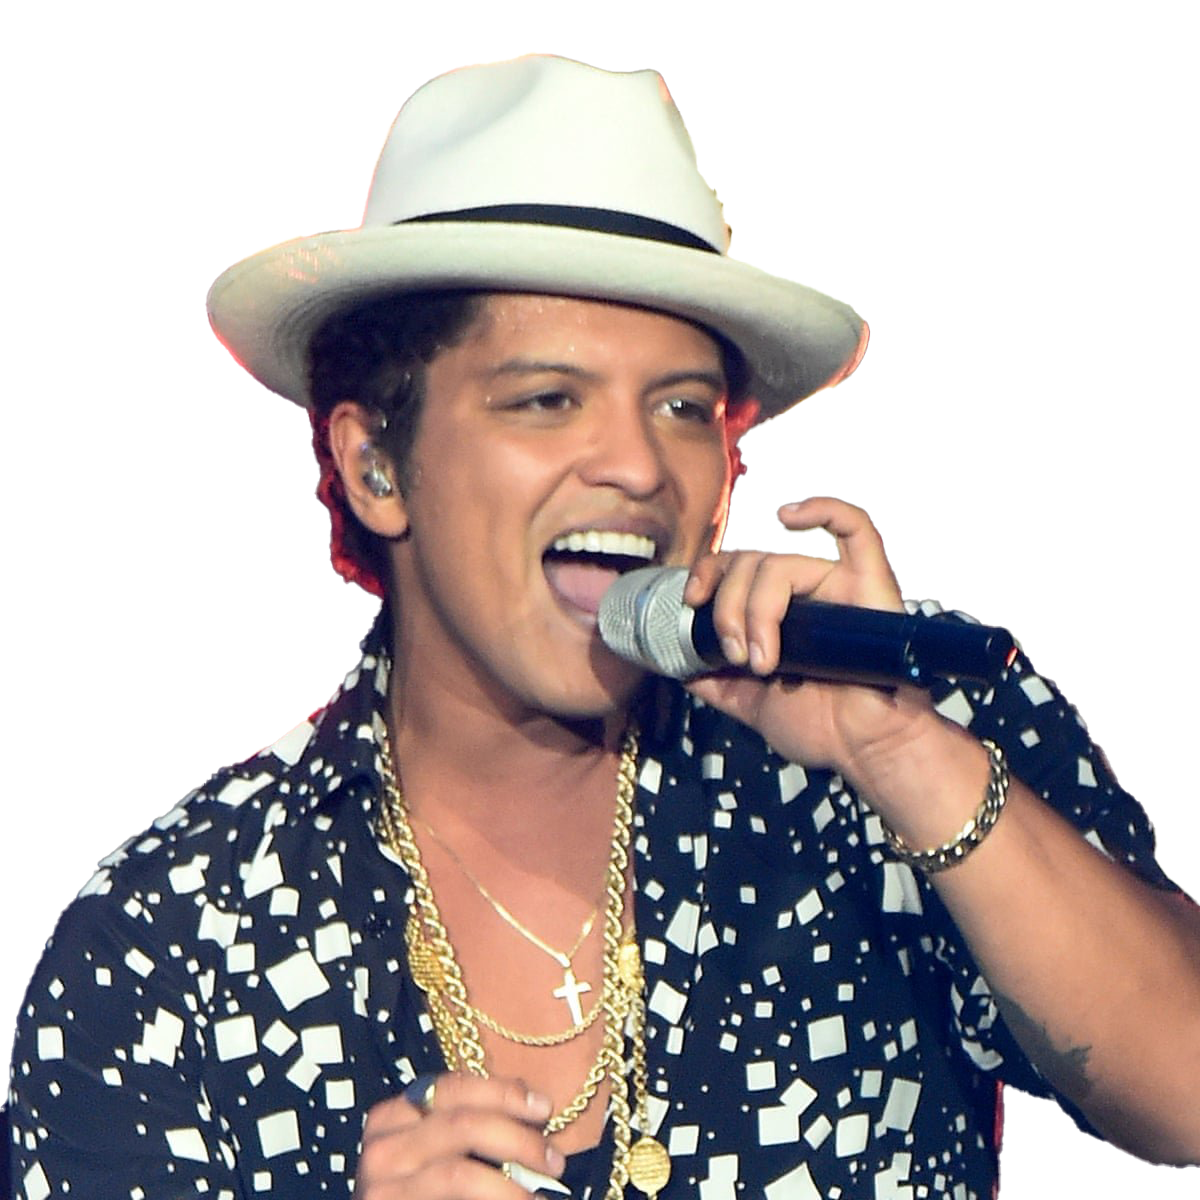 Singer Bruno Mars